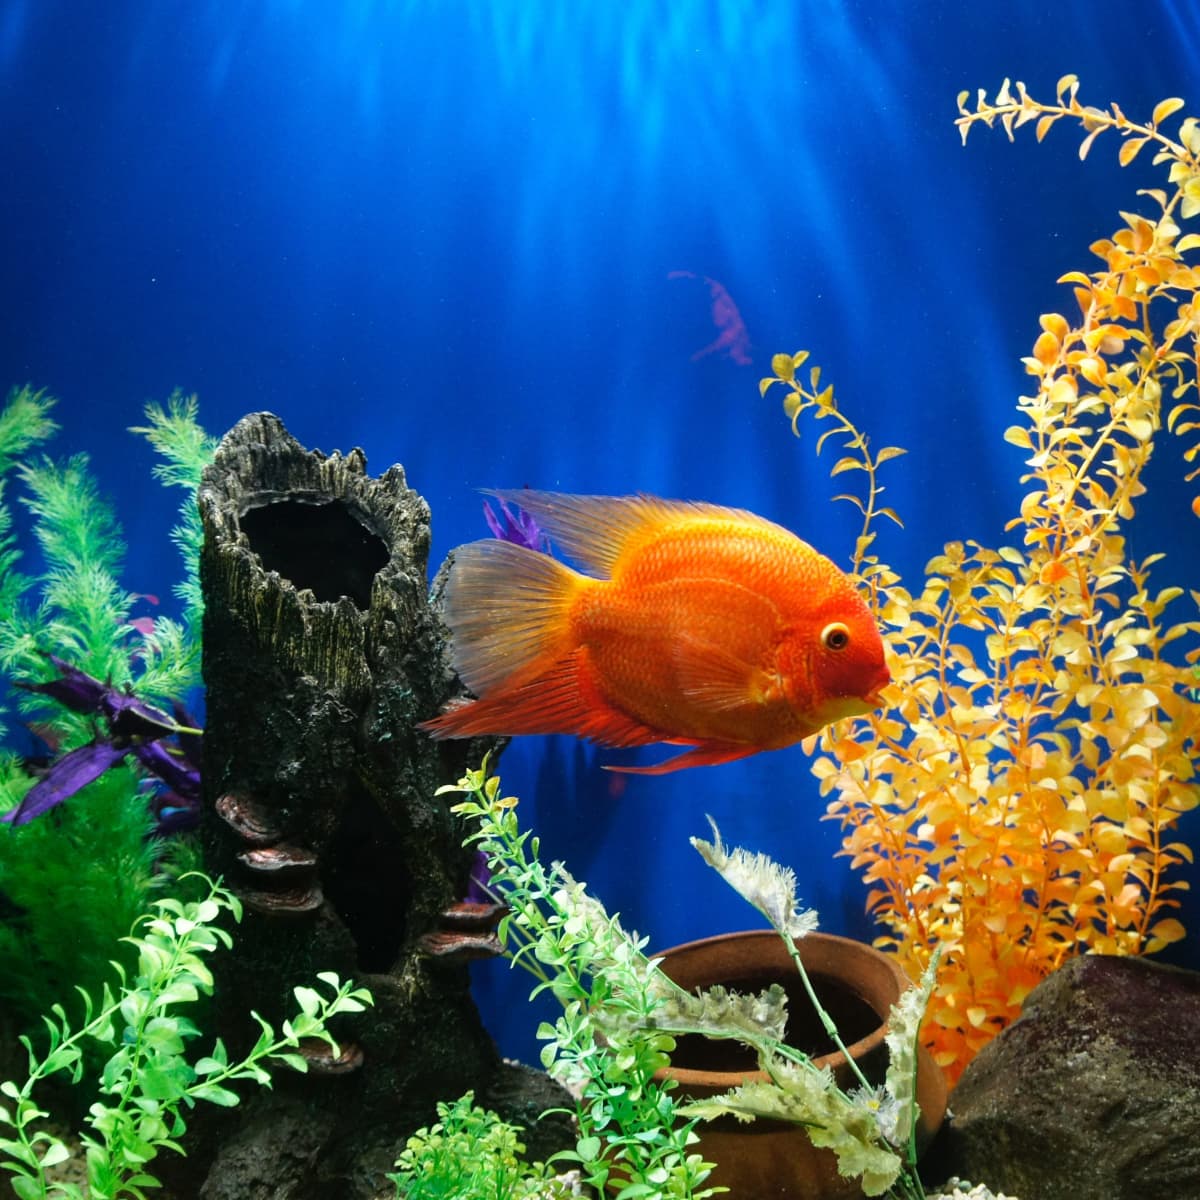 Aquarium Glass Jar||Clear Glass Vase Fish Tank Beta Goldfish Pet Supplies  Aquarium Bowl Home Decor|| Home Aquarium For Home Decoration